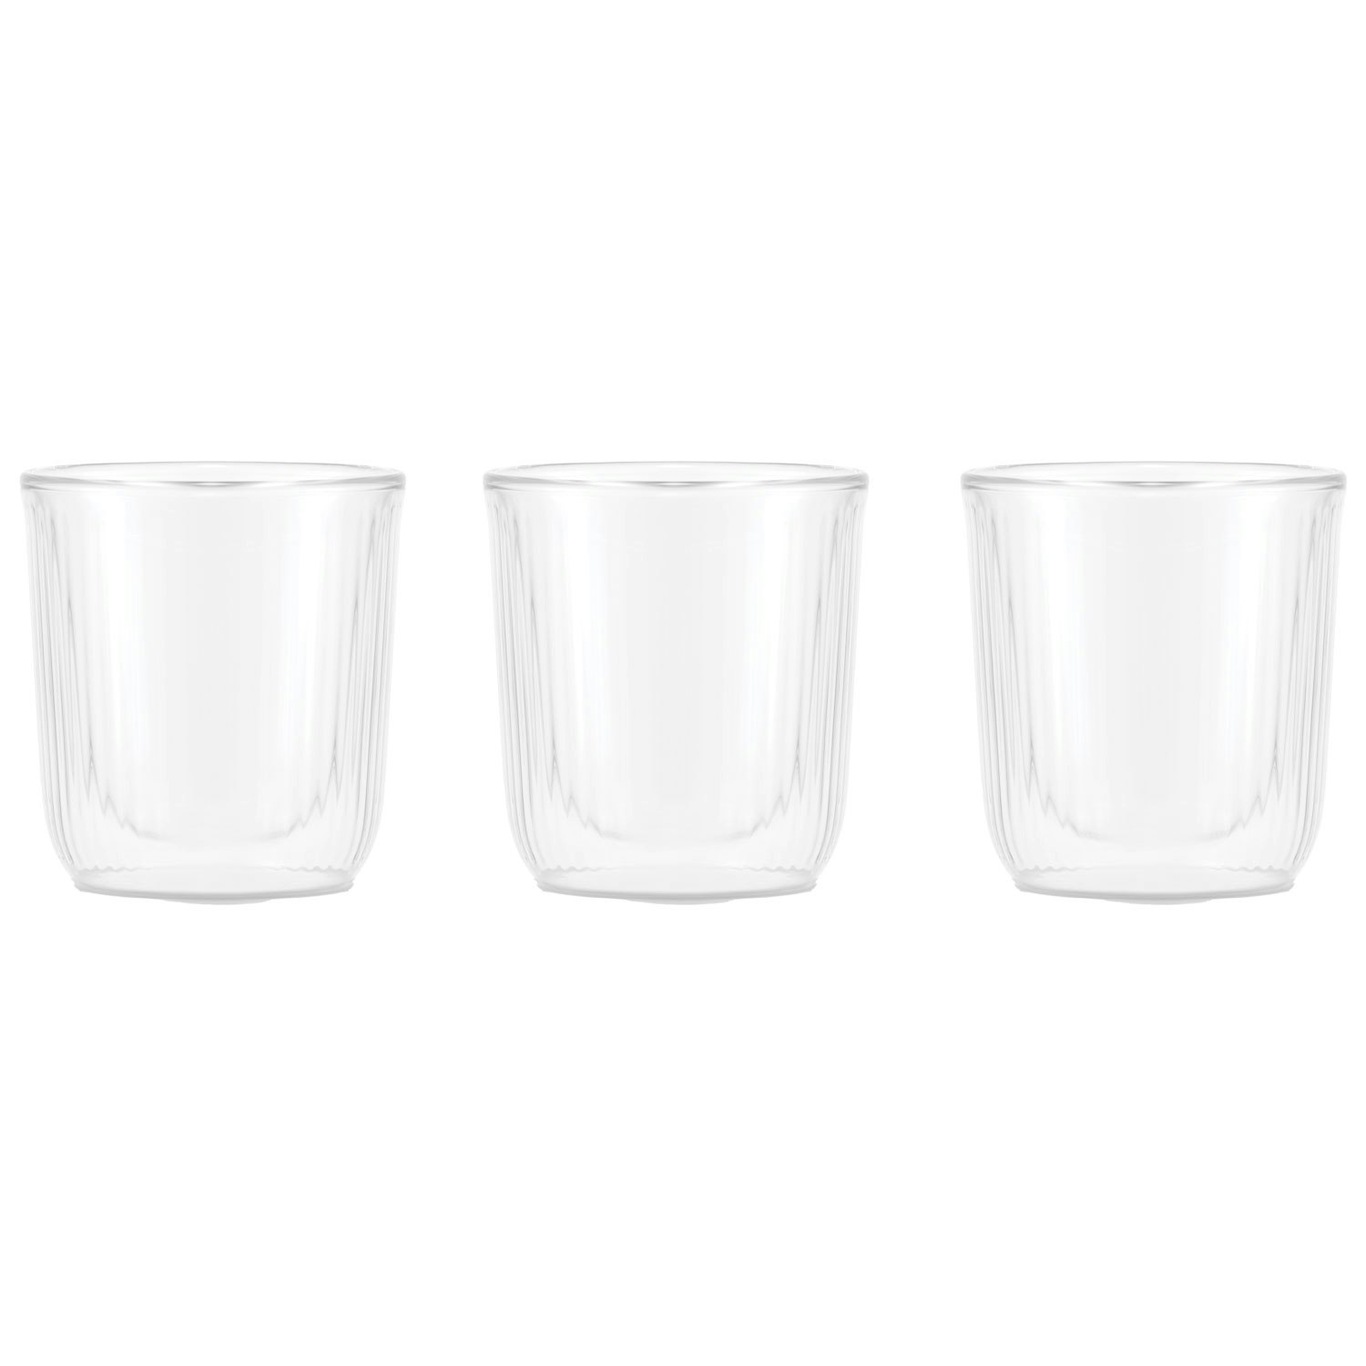 Douro Sake Gläser 3-er Set, 6 cl